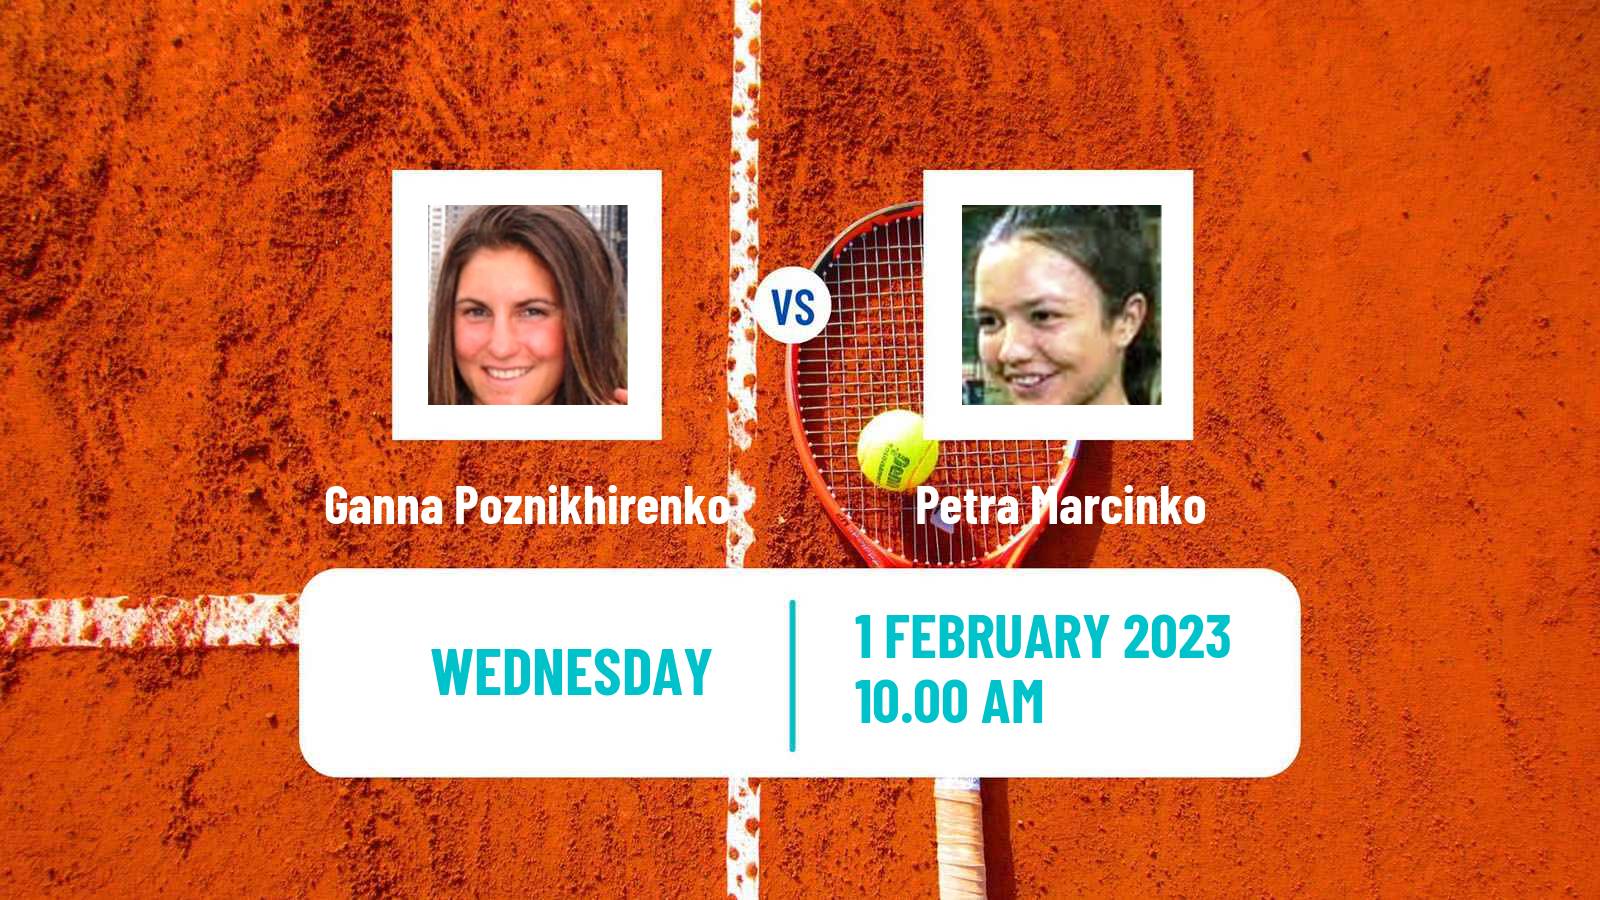 Tennis ITF Tournaments Ganna Poznikhirenko - Petra Marcinko